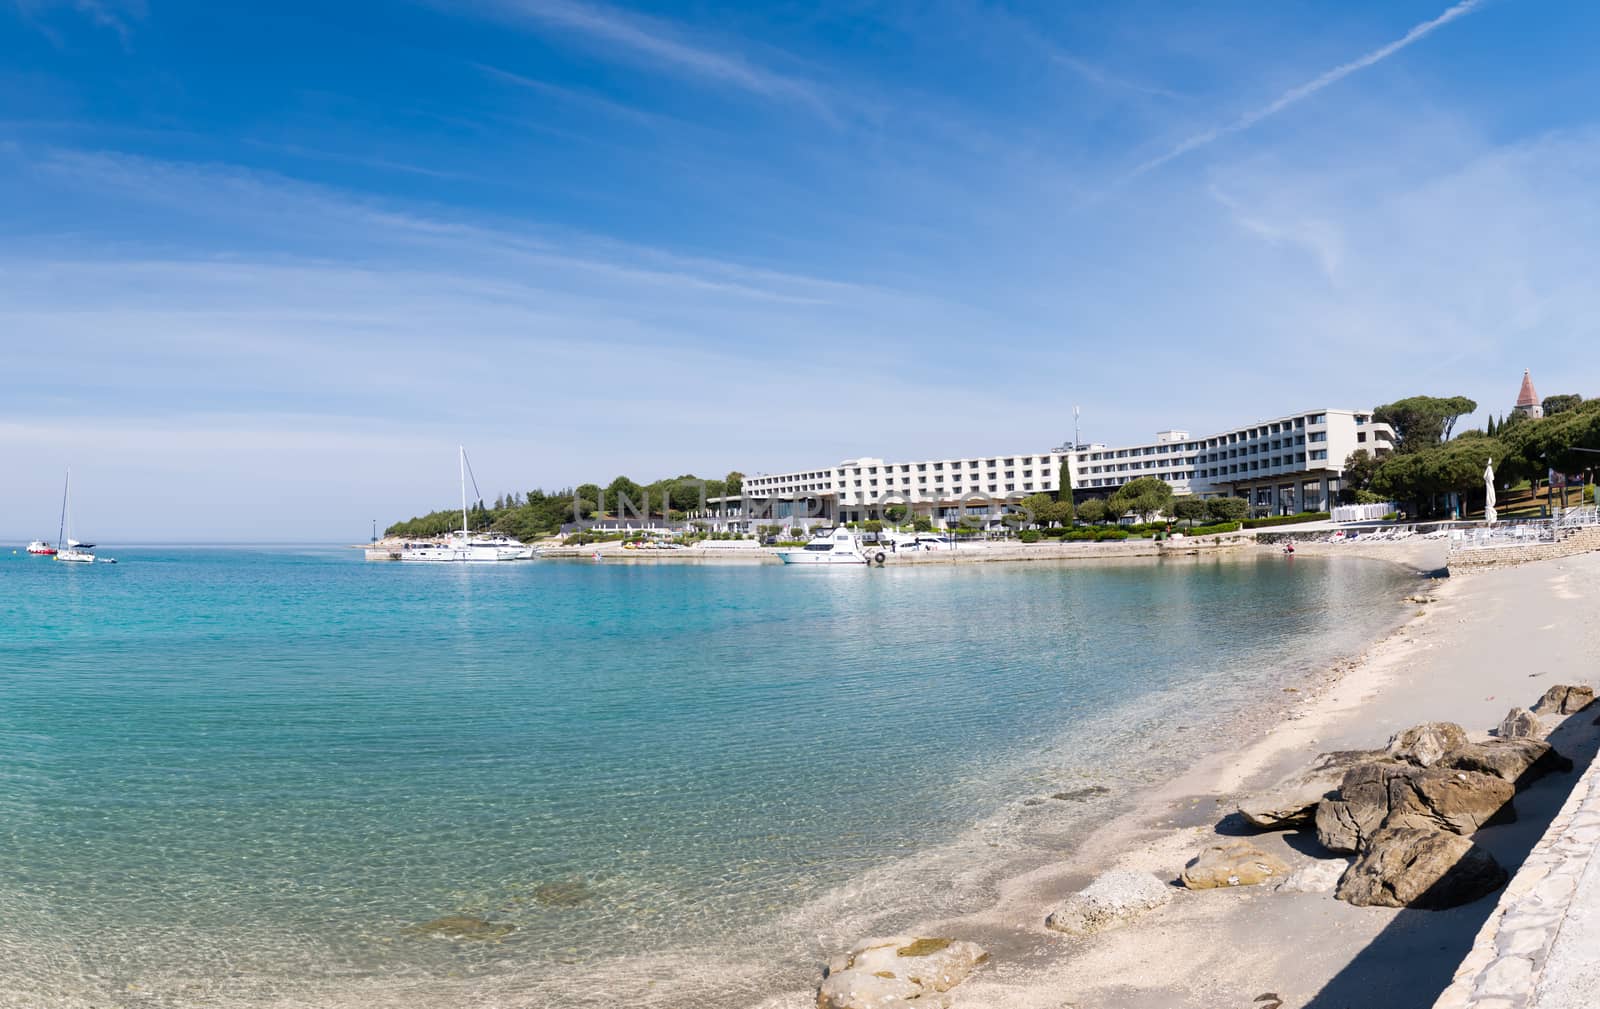 Seaside hotel with beach and turquoise water, Sveti Andrija or Red island near Rovinj, Croatia by asafaric